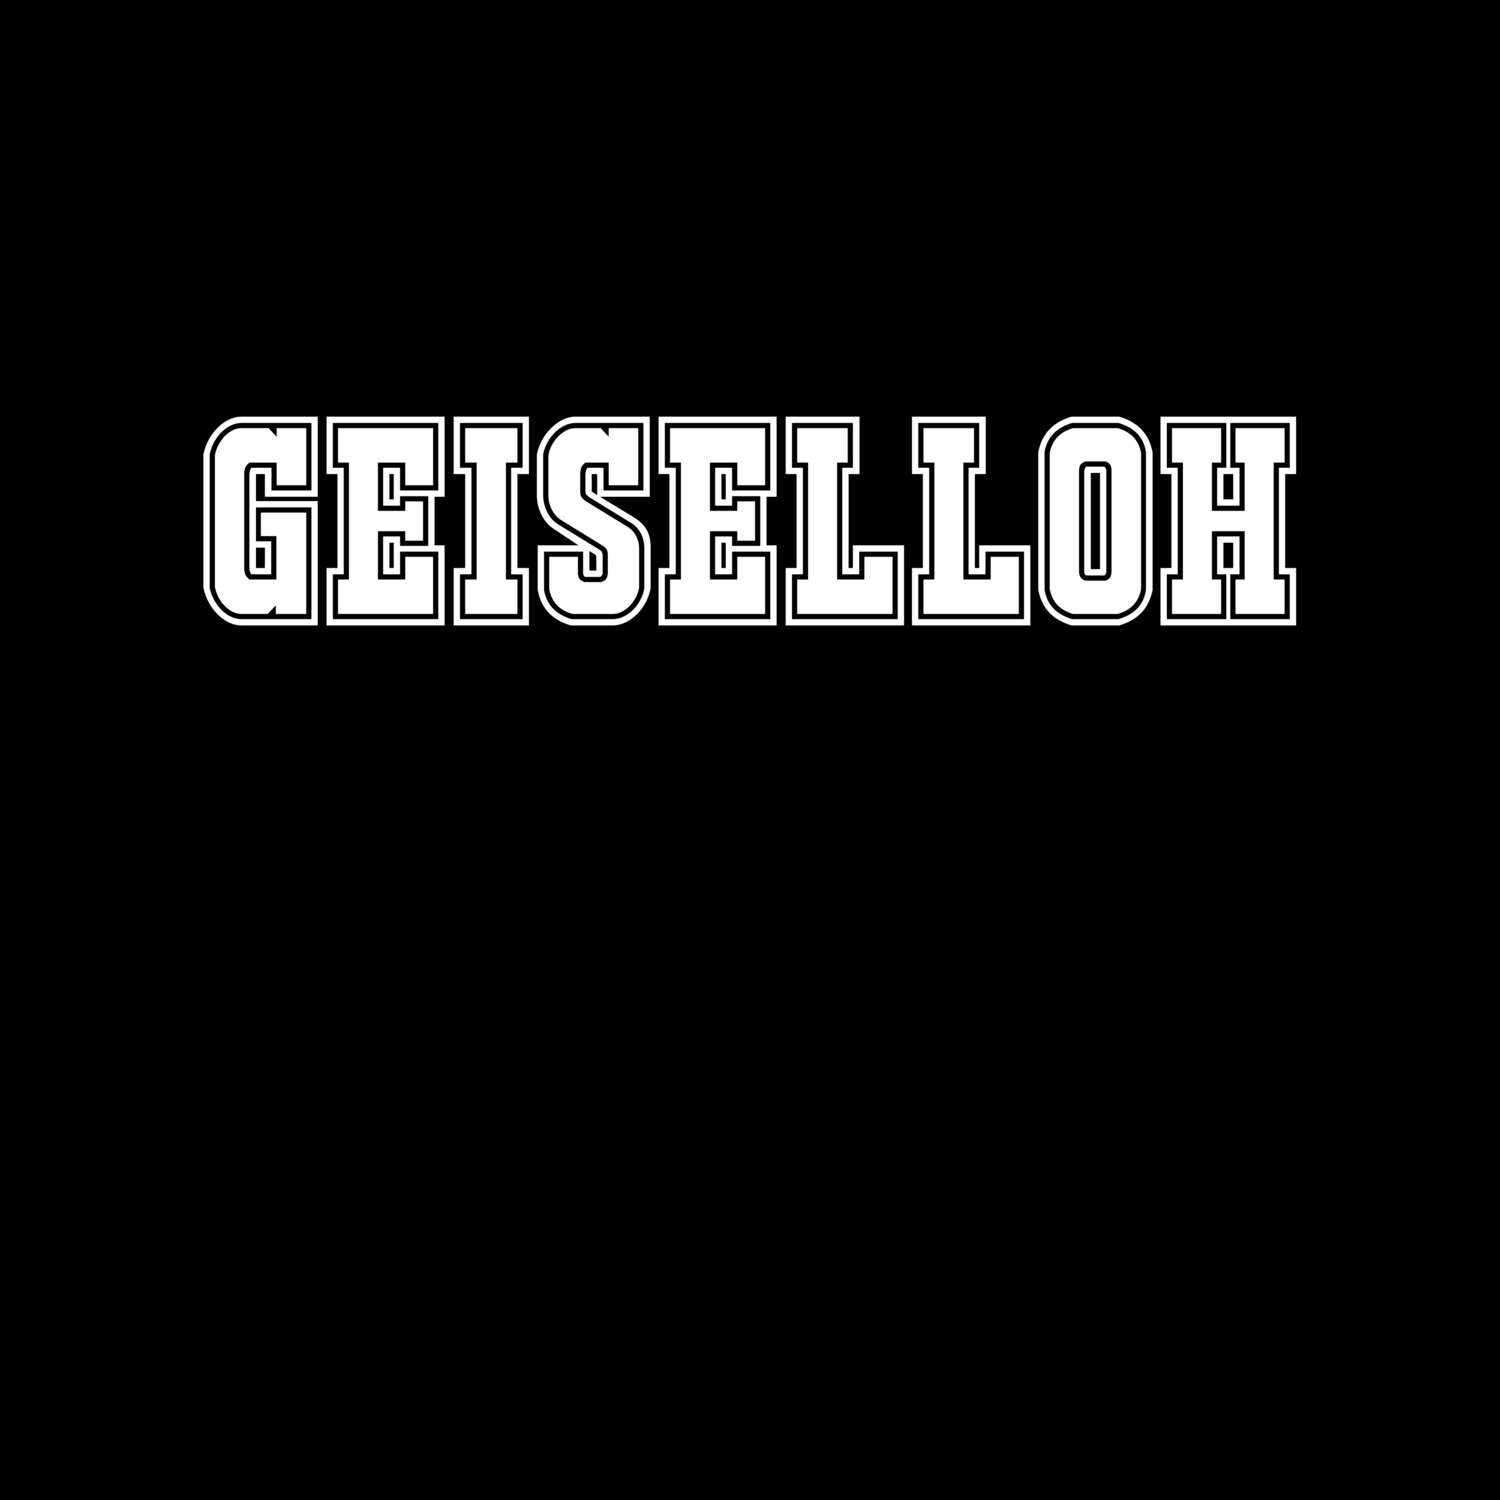 Geiselloh T-Shirt »Classic«